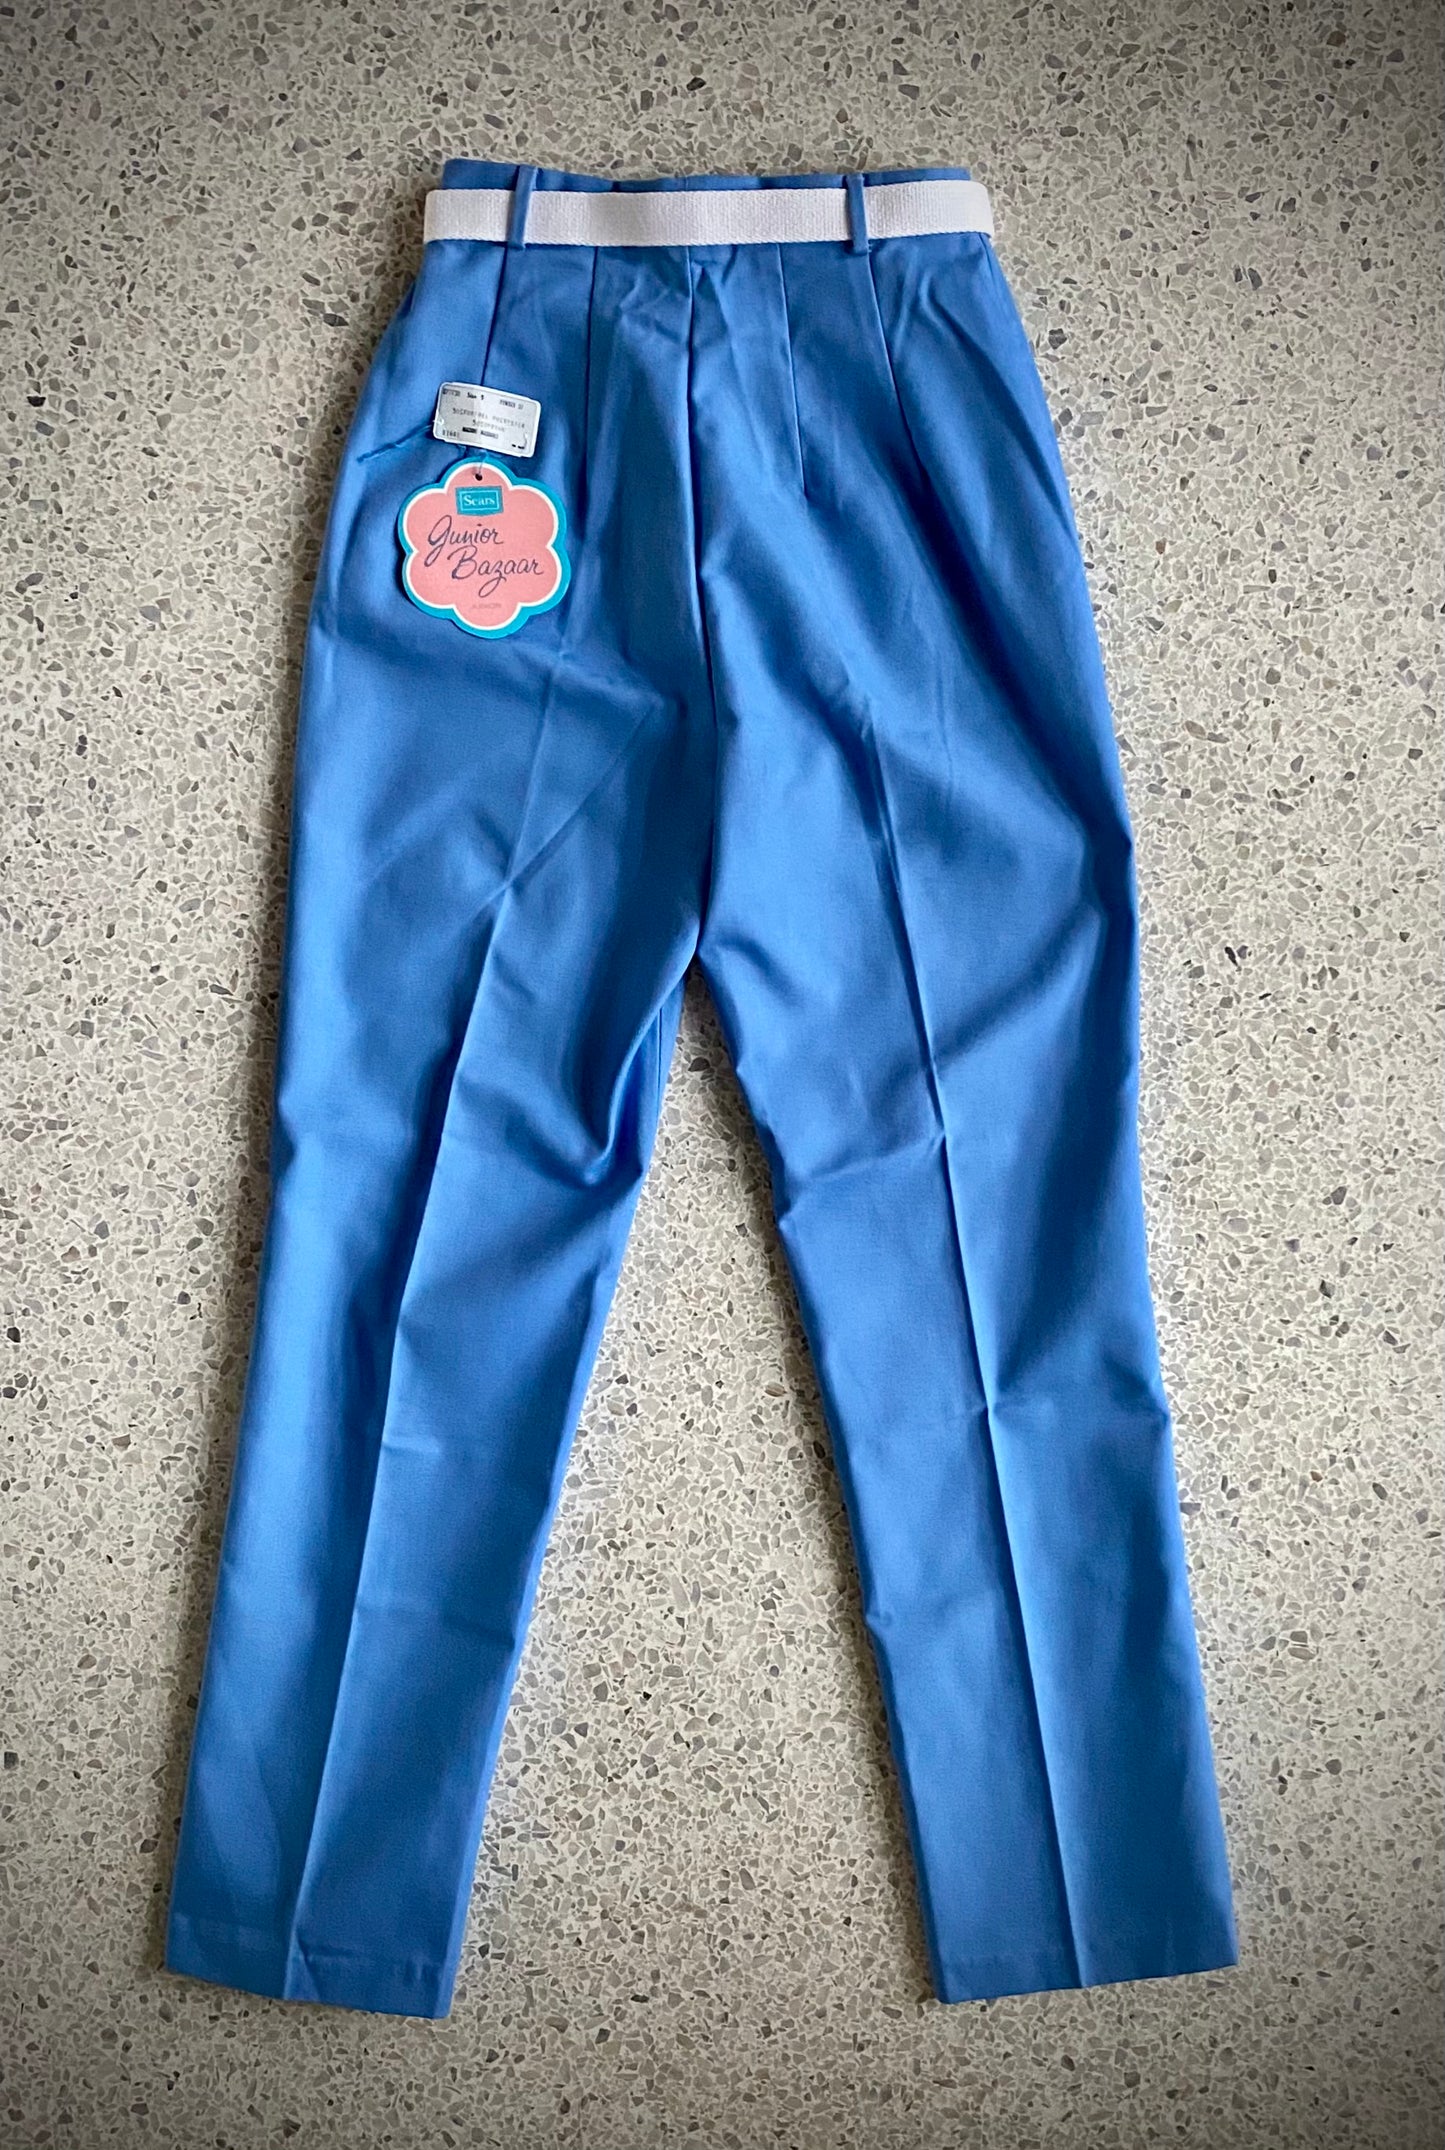 1960s Sears Junior Bazaar Pants With Original Tags